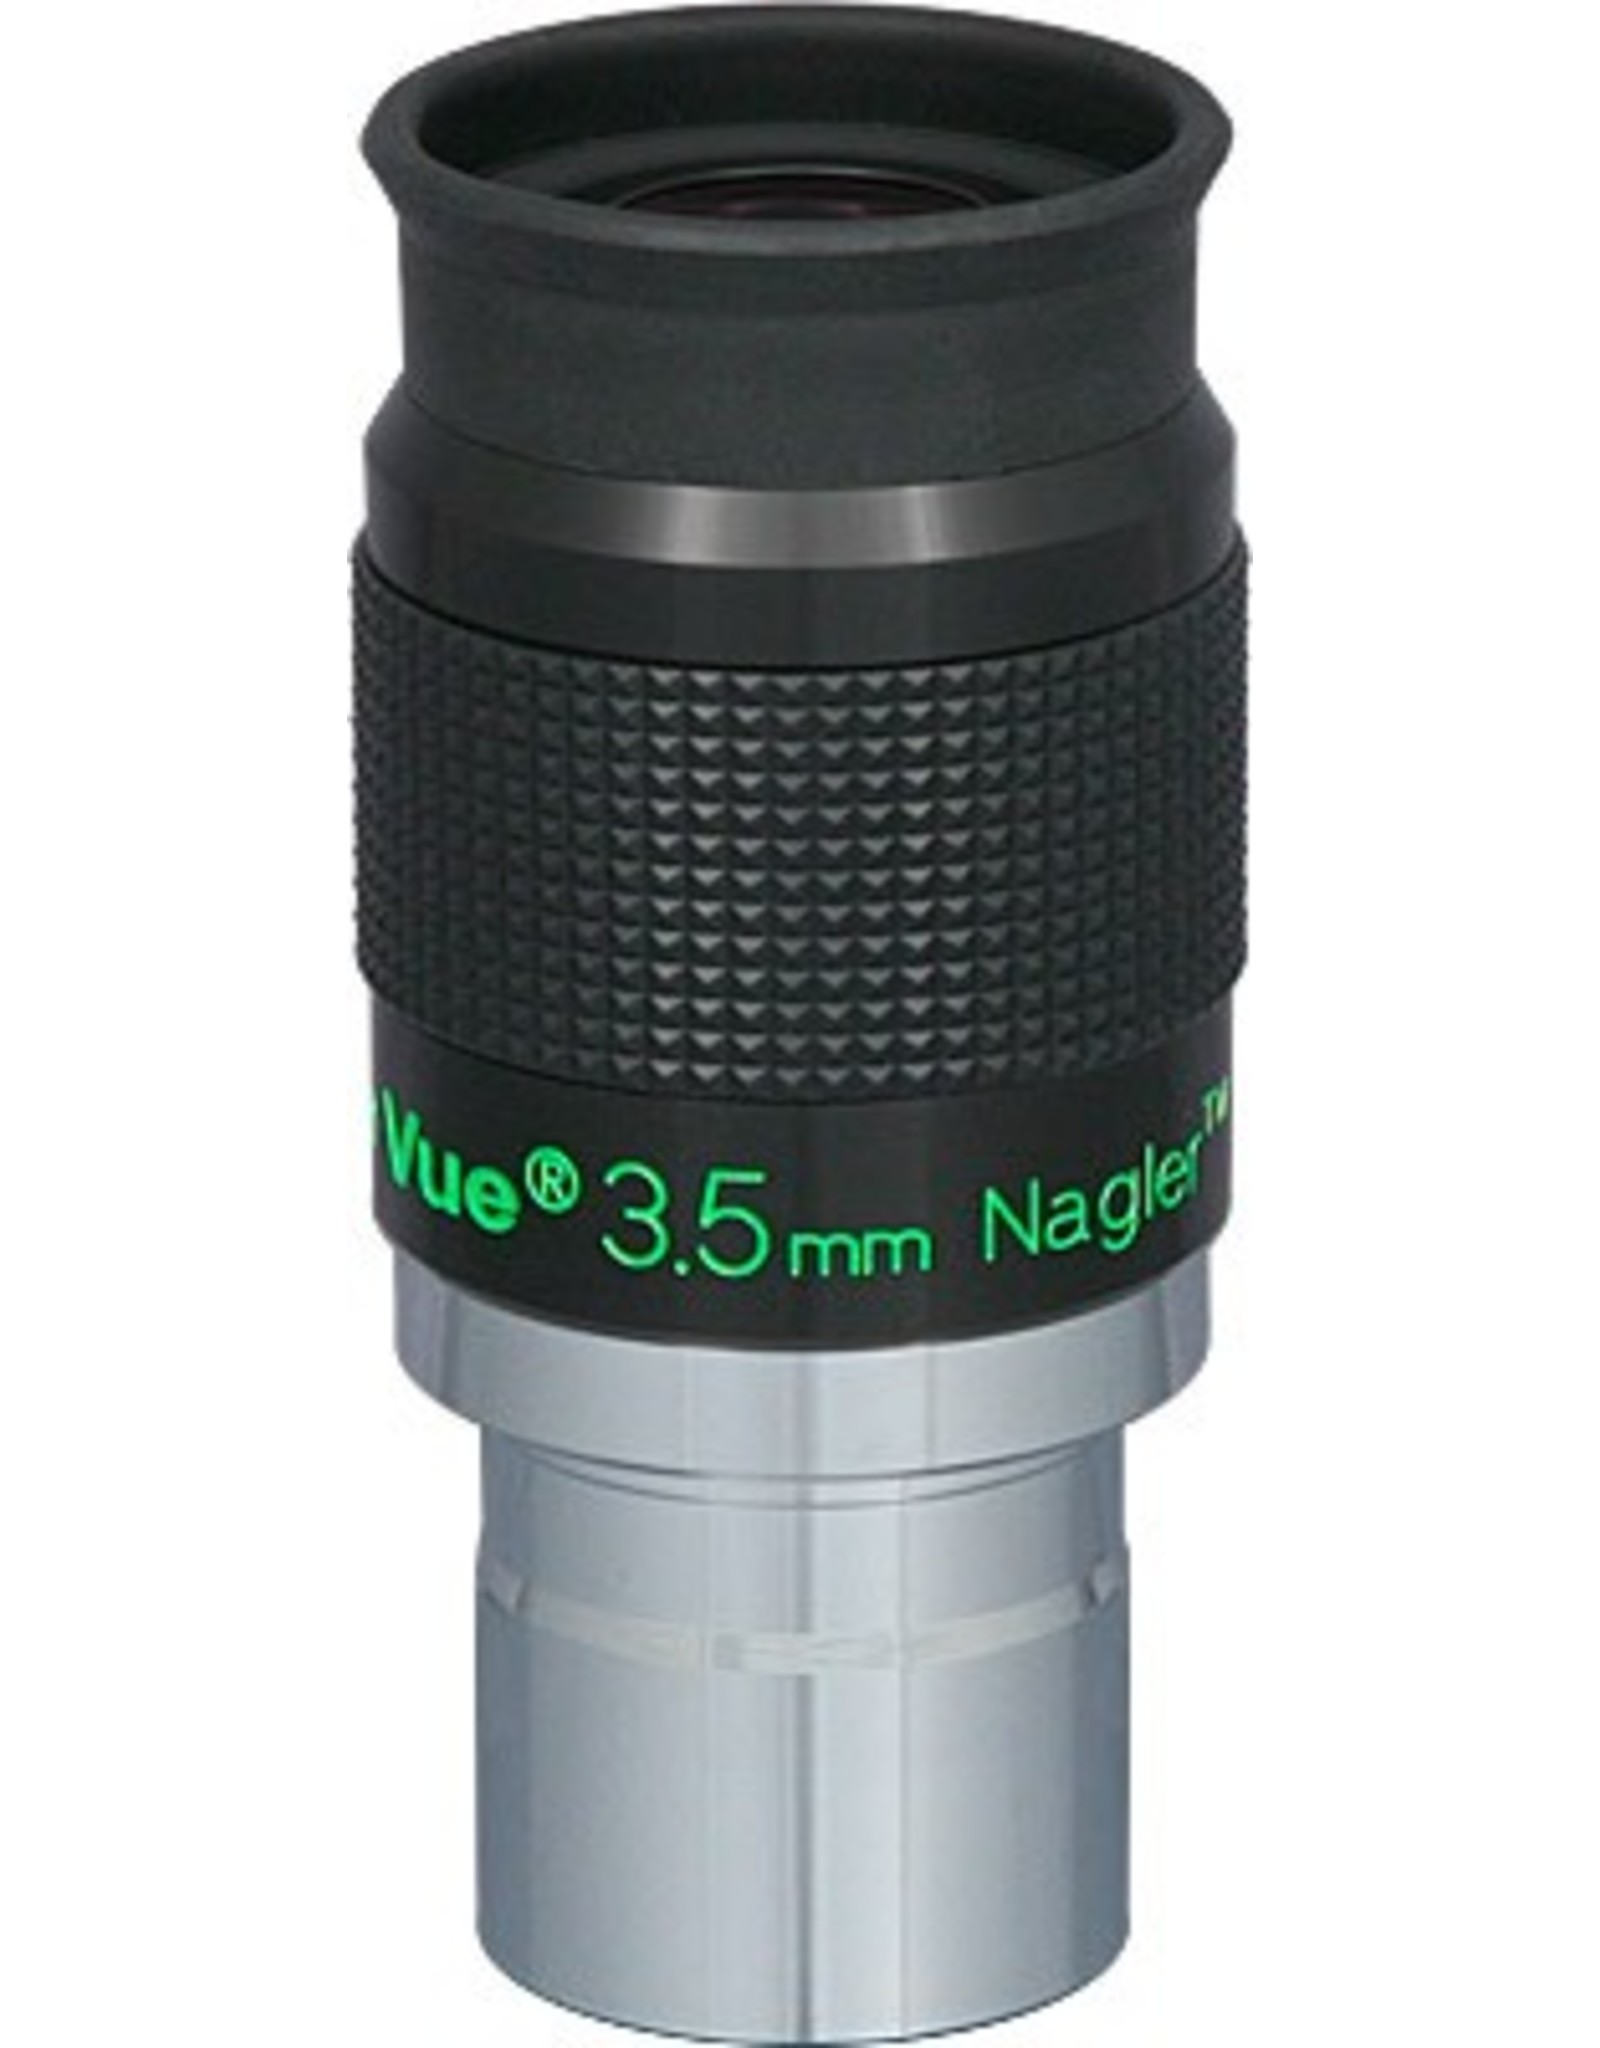 Tele Vue 3.5mm Nagler Type 6 Eyepiece - 1.25